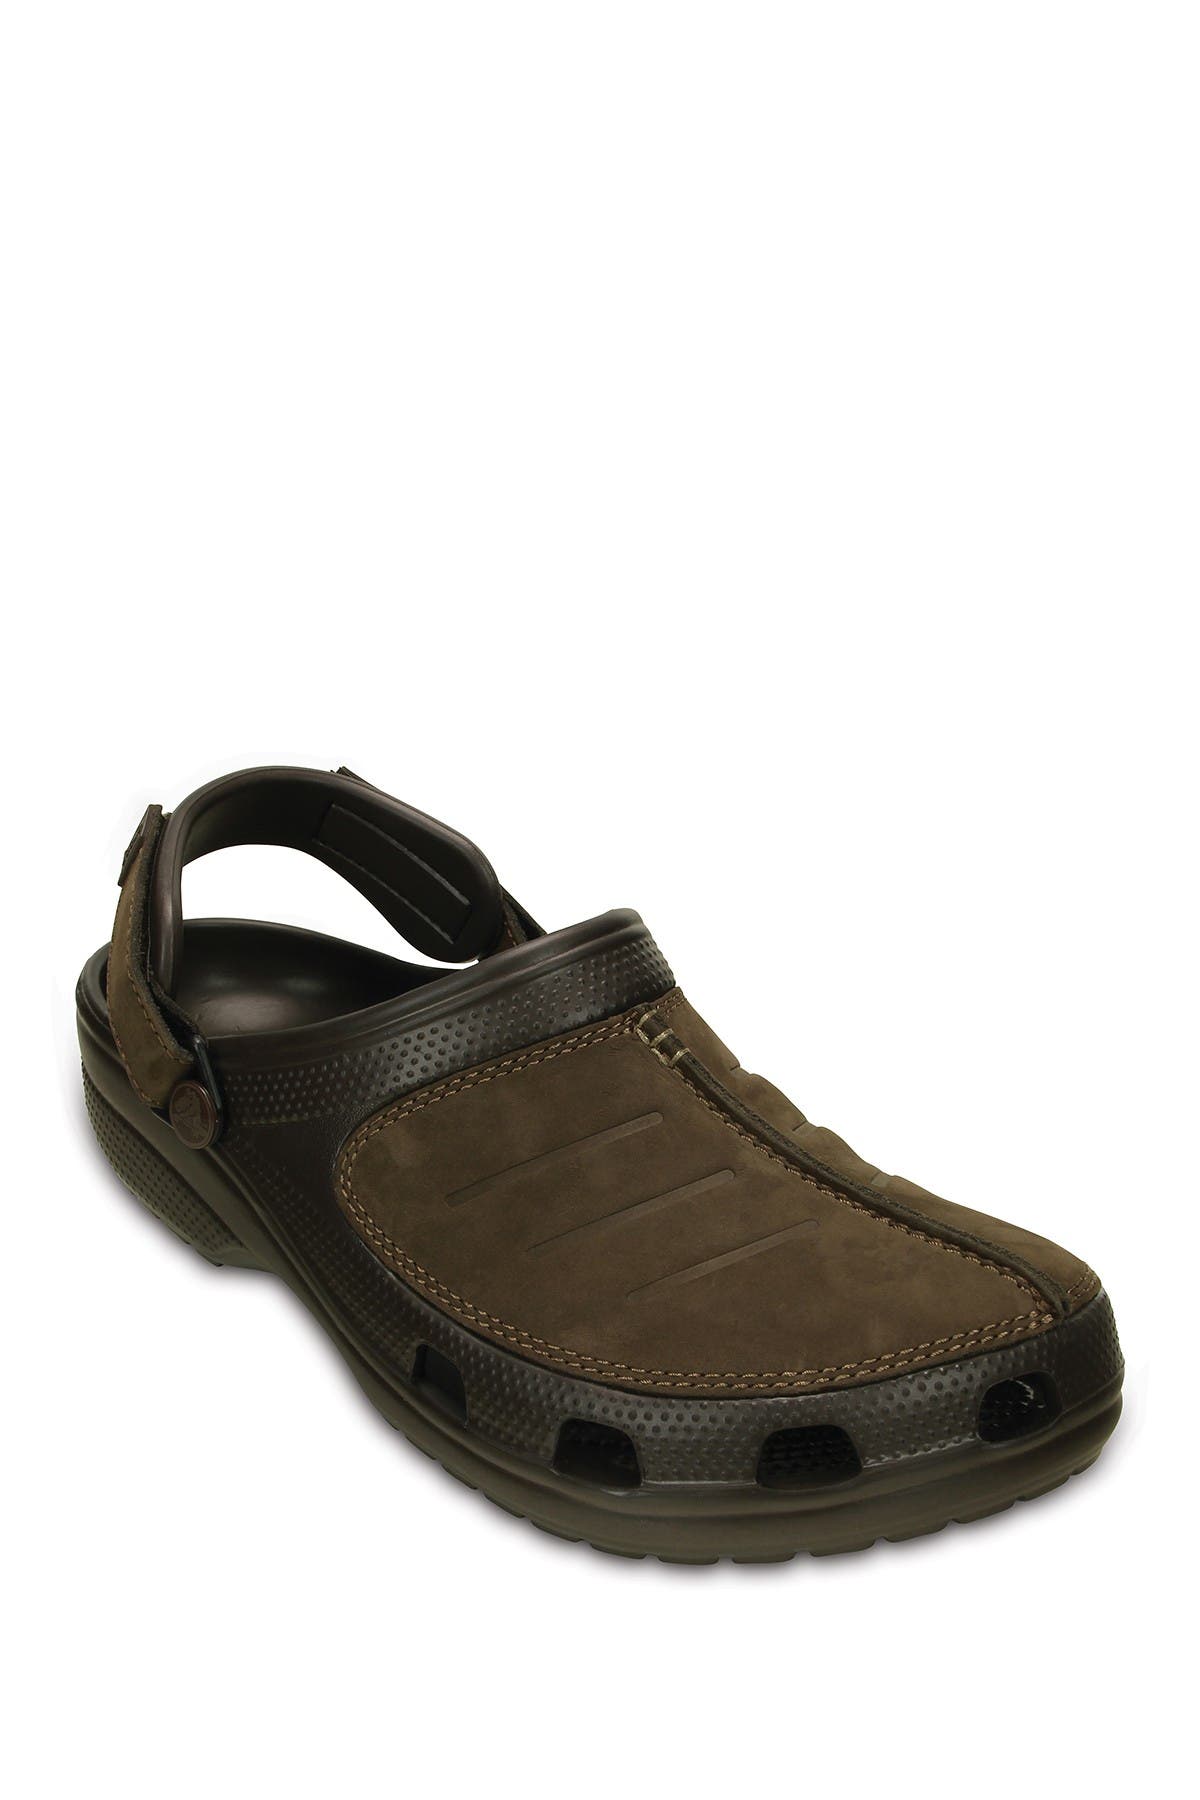 leather crocs yukon